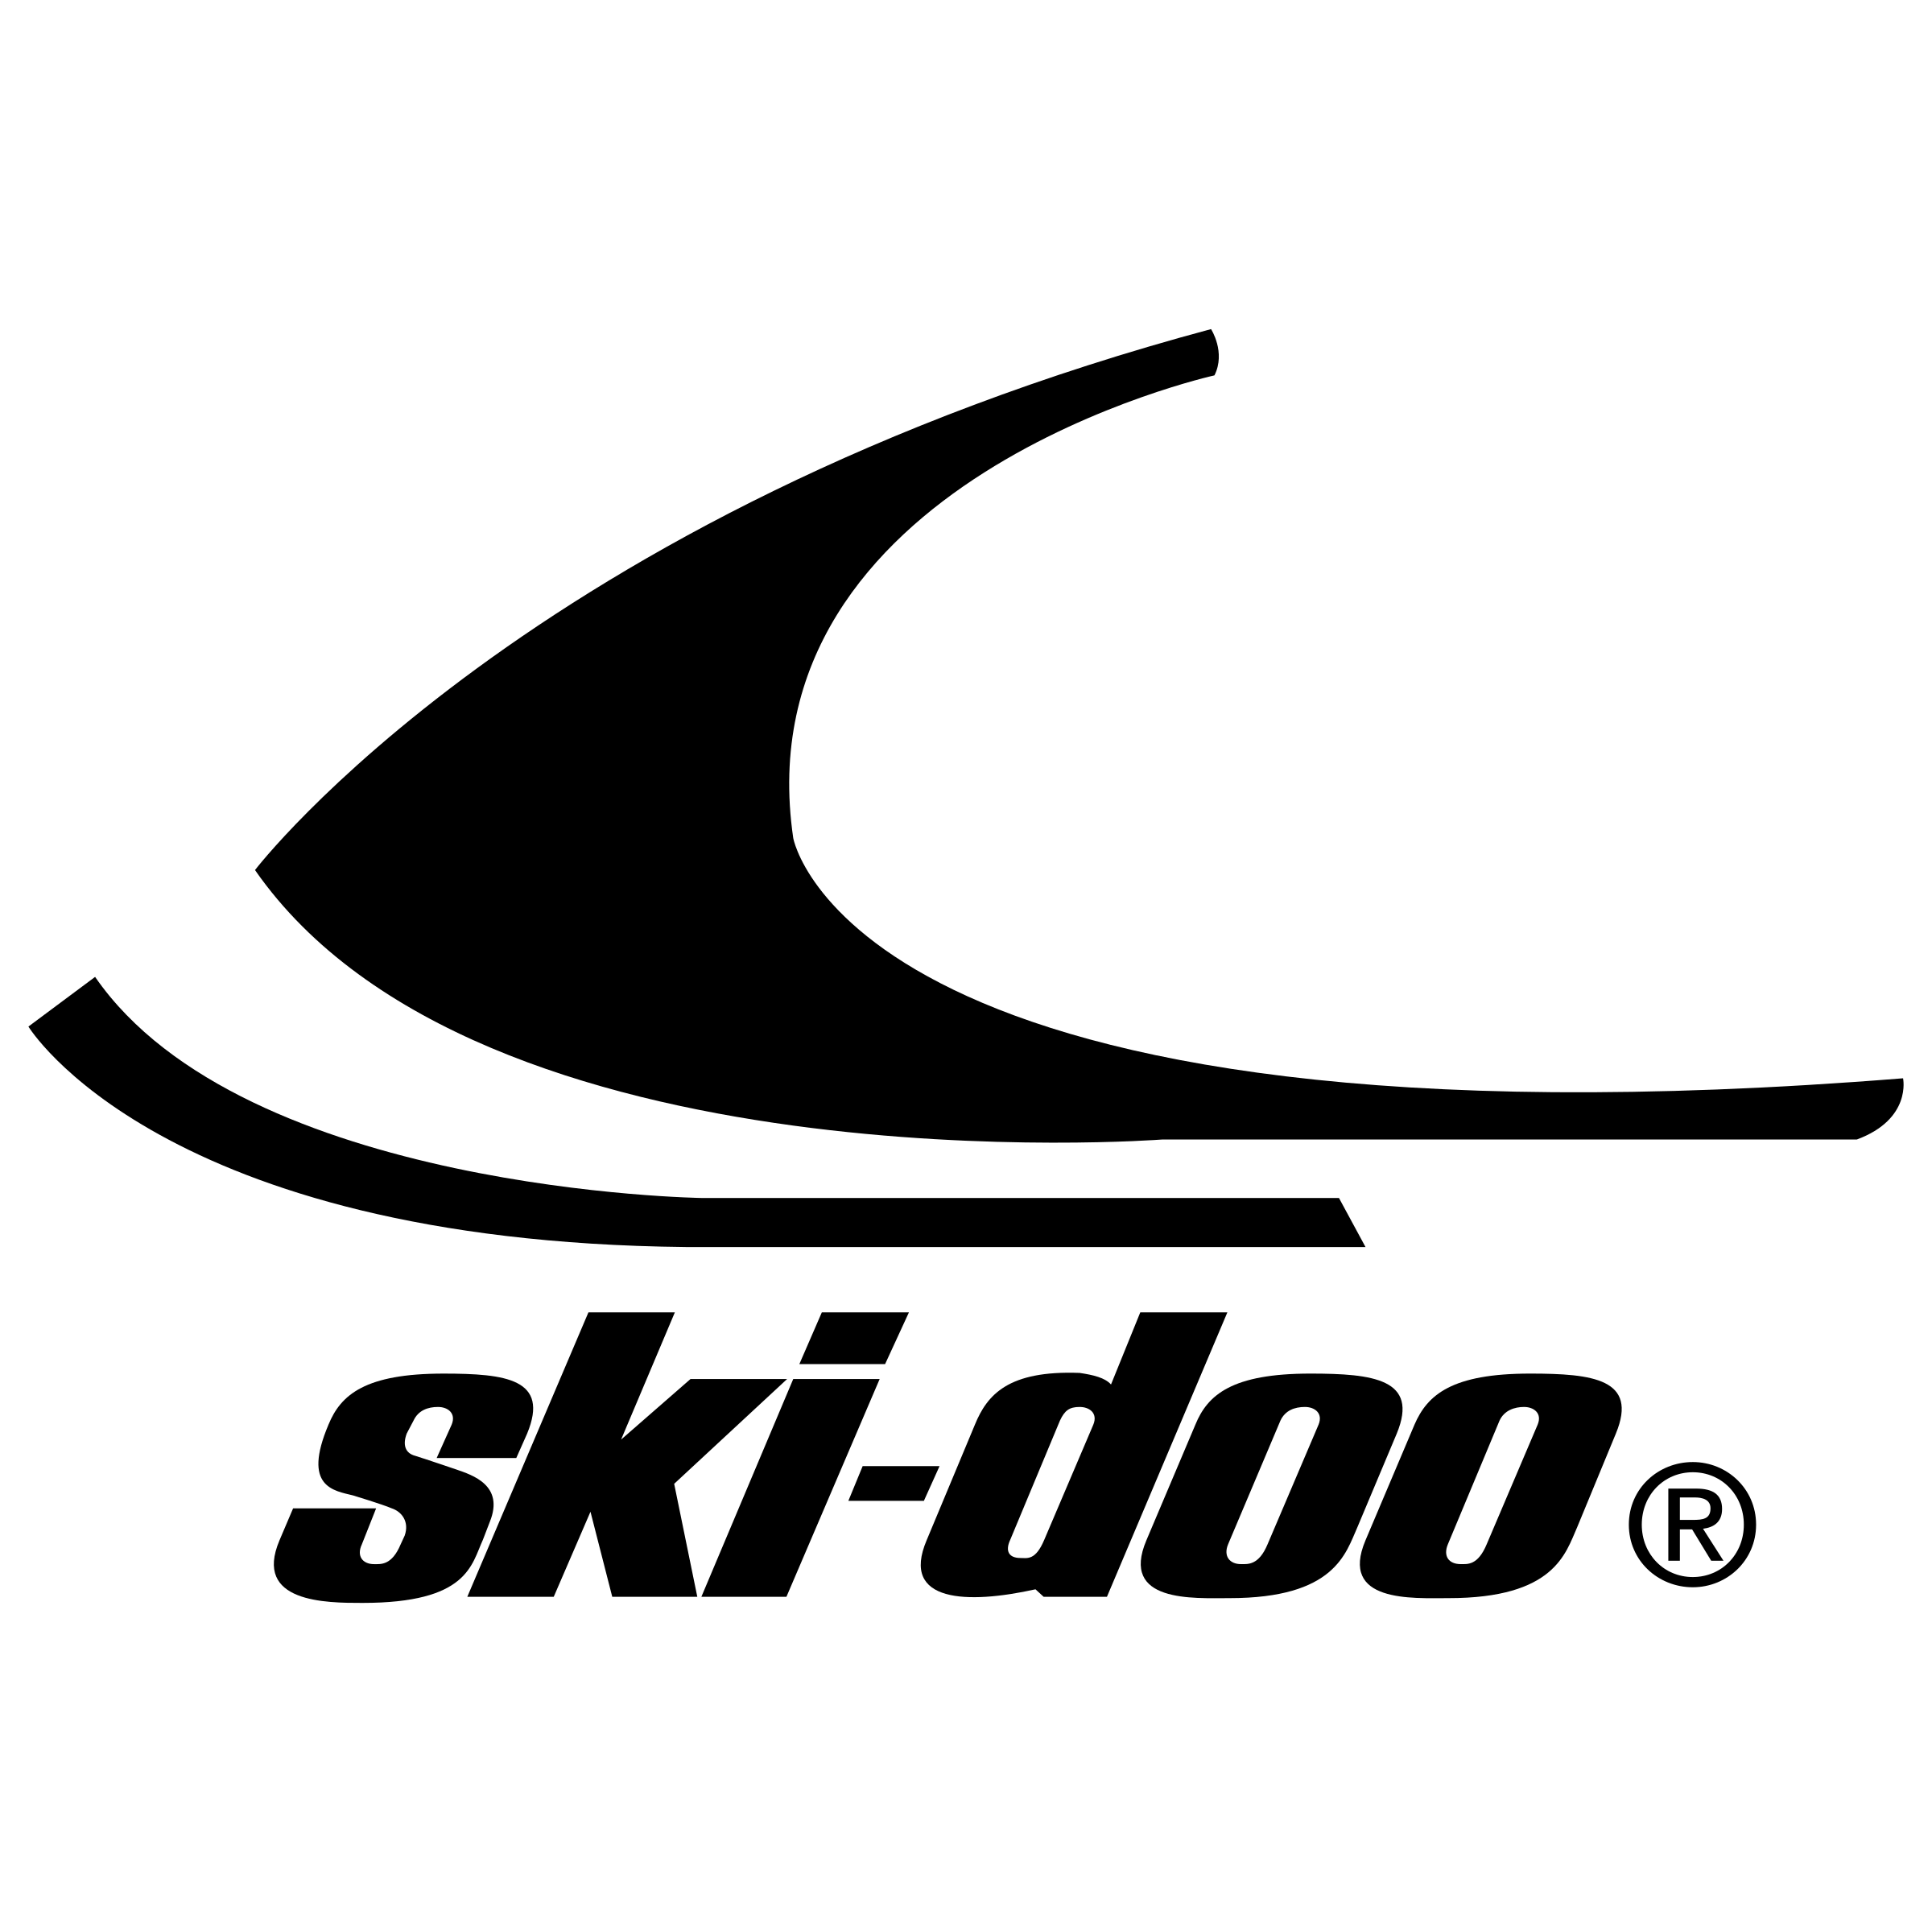 Ski-Doo Logo - Ski Doo Logo PNG Transparent & SVG Vector - Freebie Supply